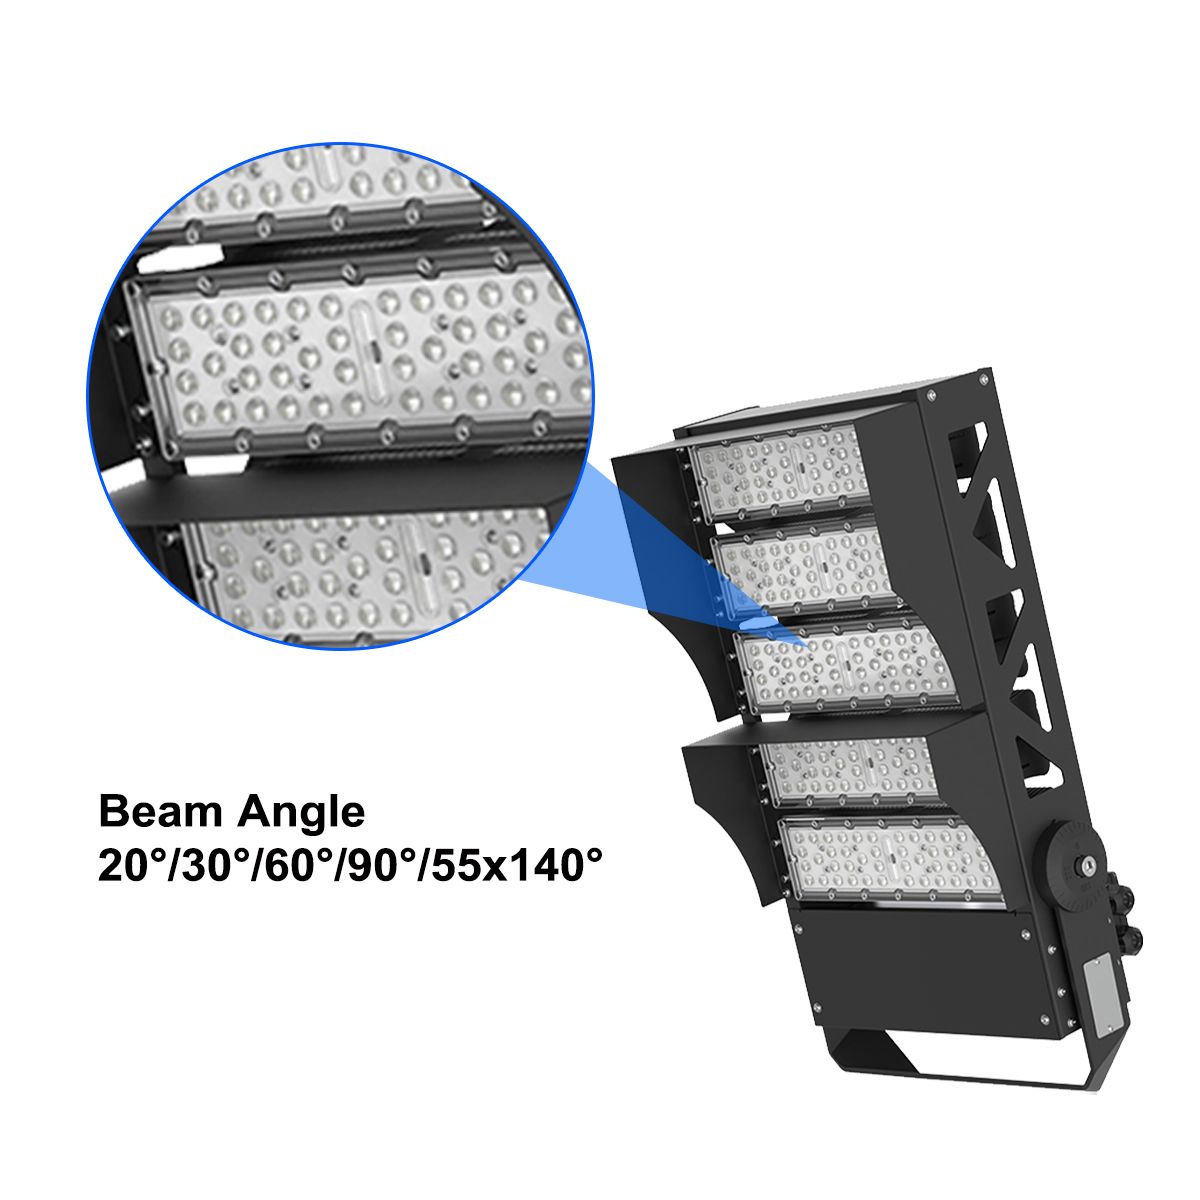 Green Deals: Energetic Four-Foot LED Shoplight $38 Prime shipped (Reg. $50), more | Electrek